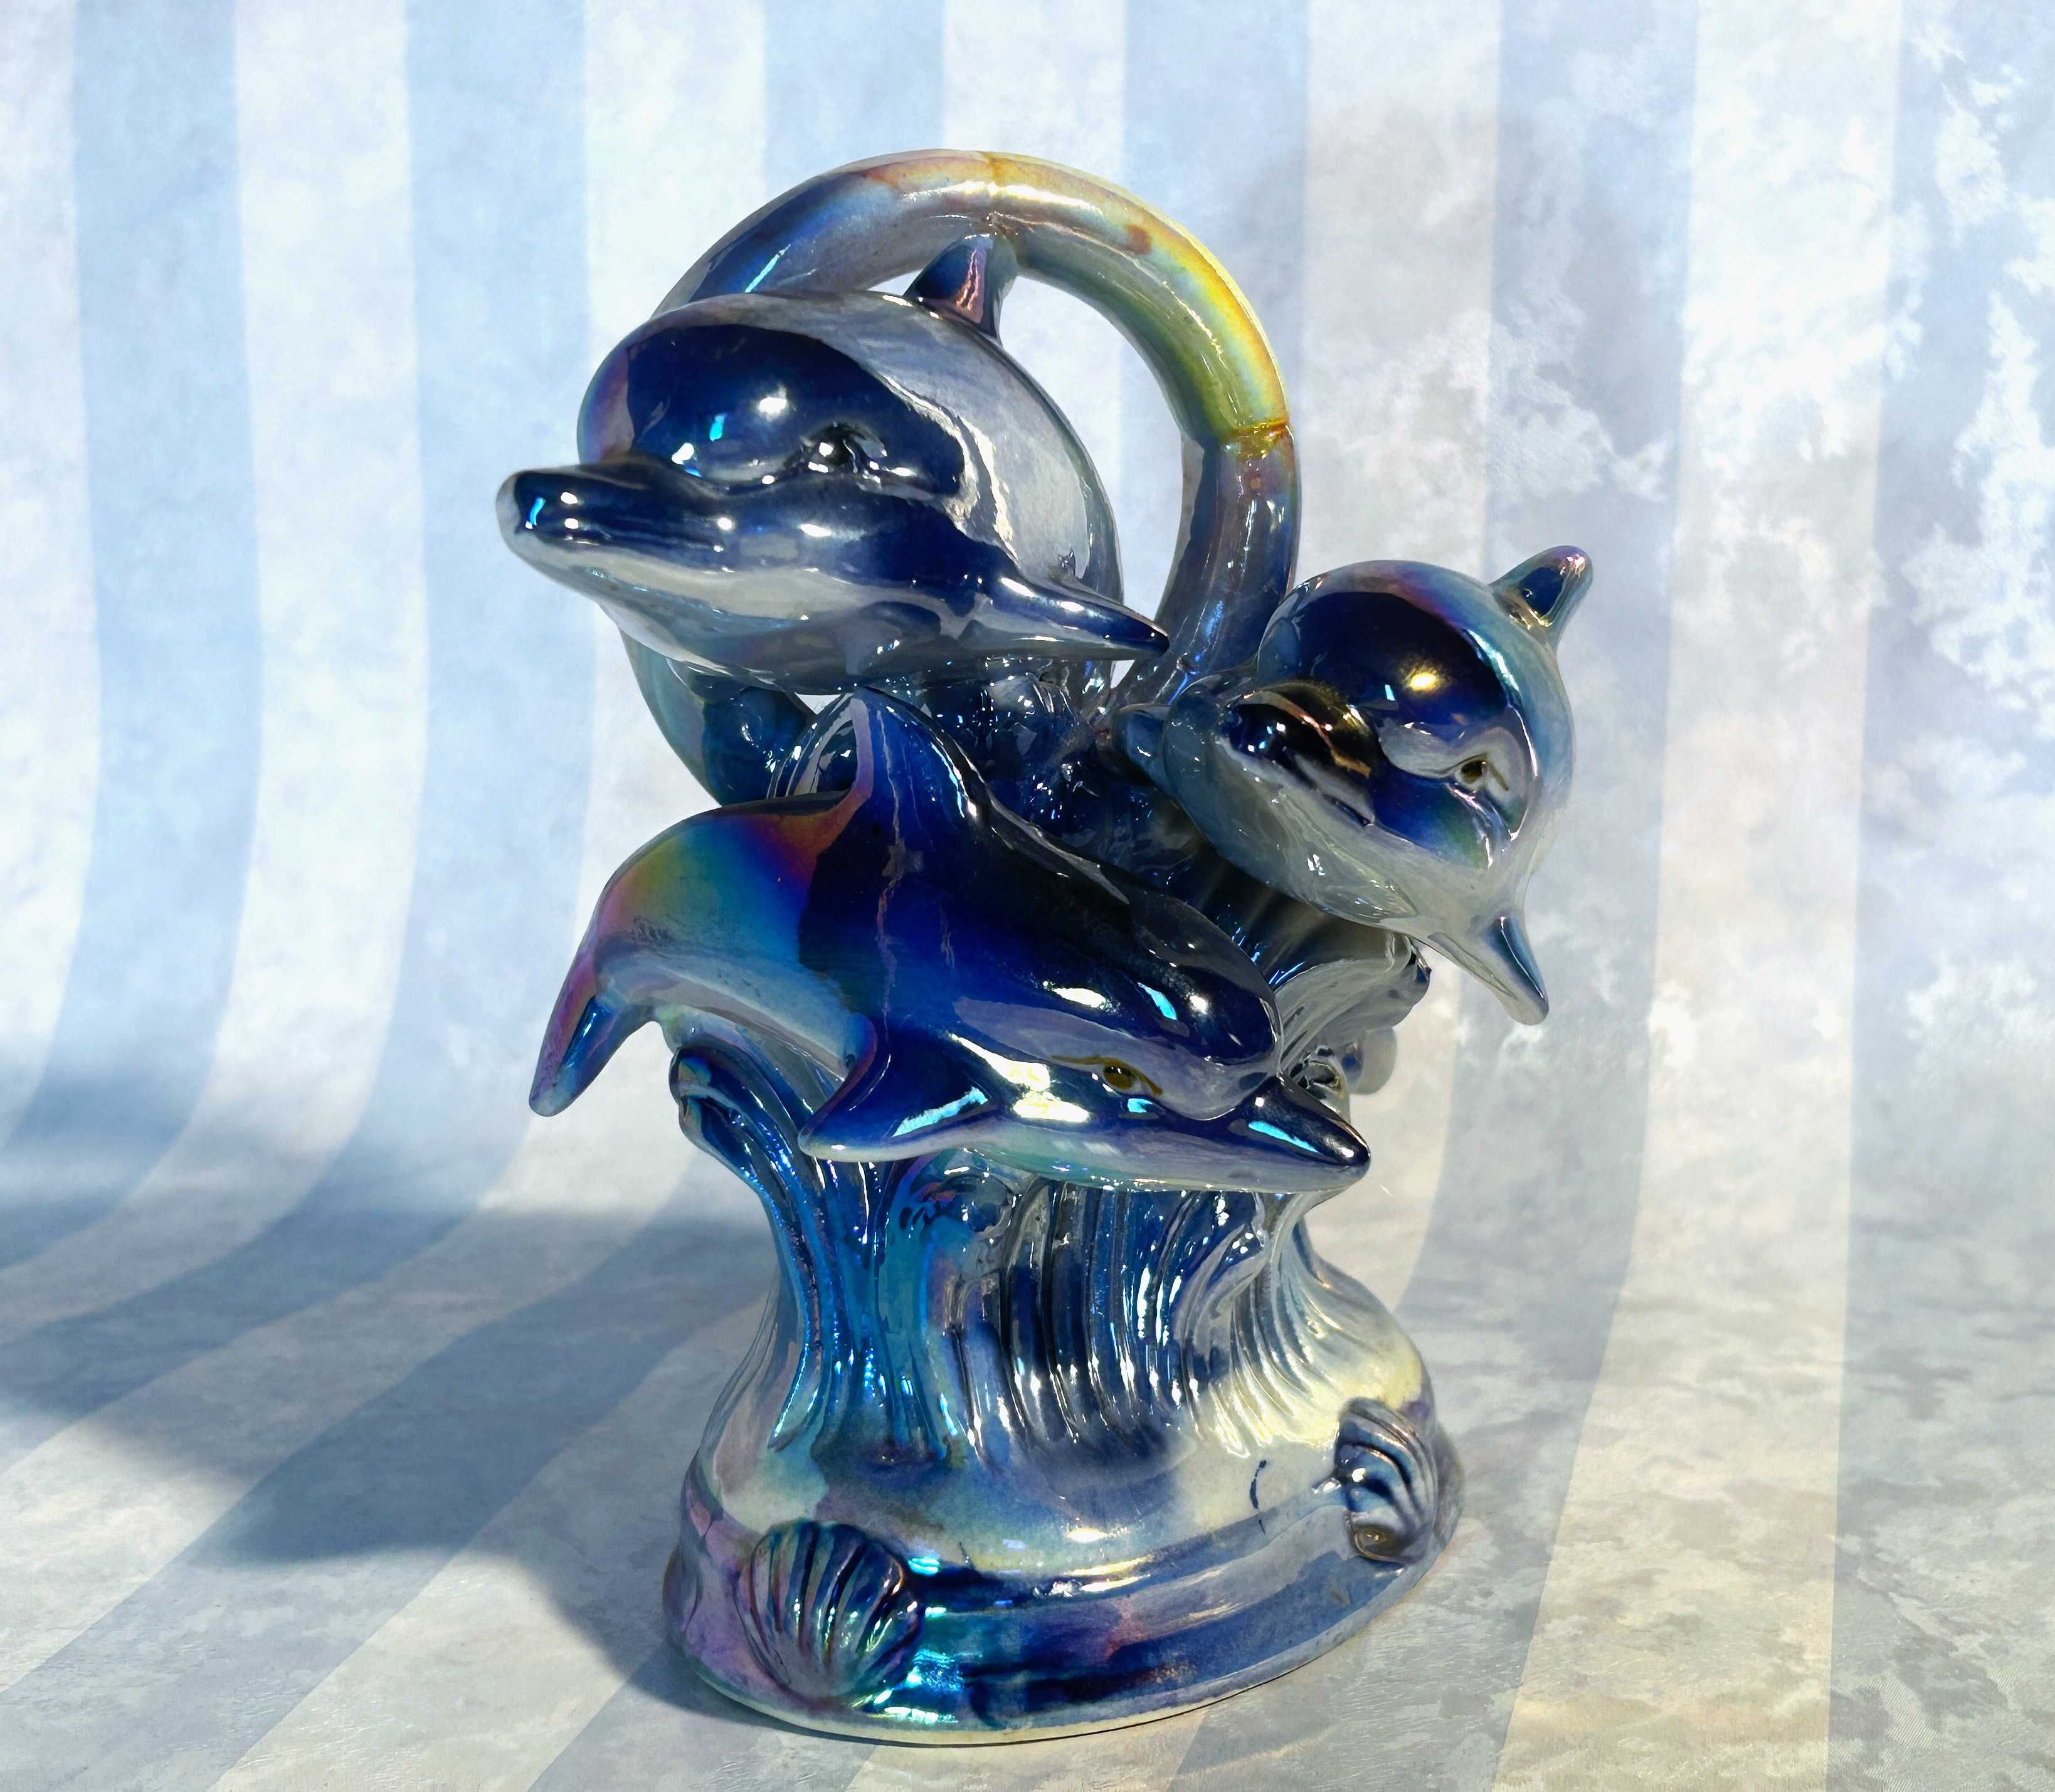 Figurka delfiny radosne, porcelana, kolekcjonerska szkliwiona